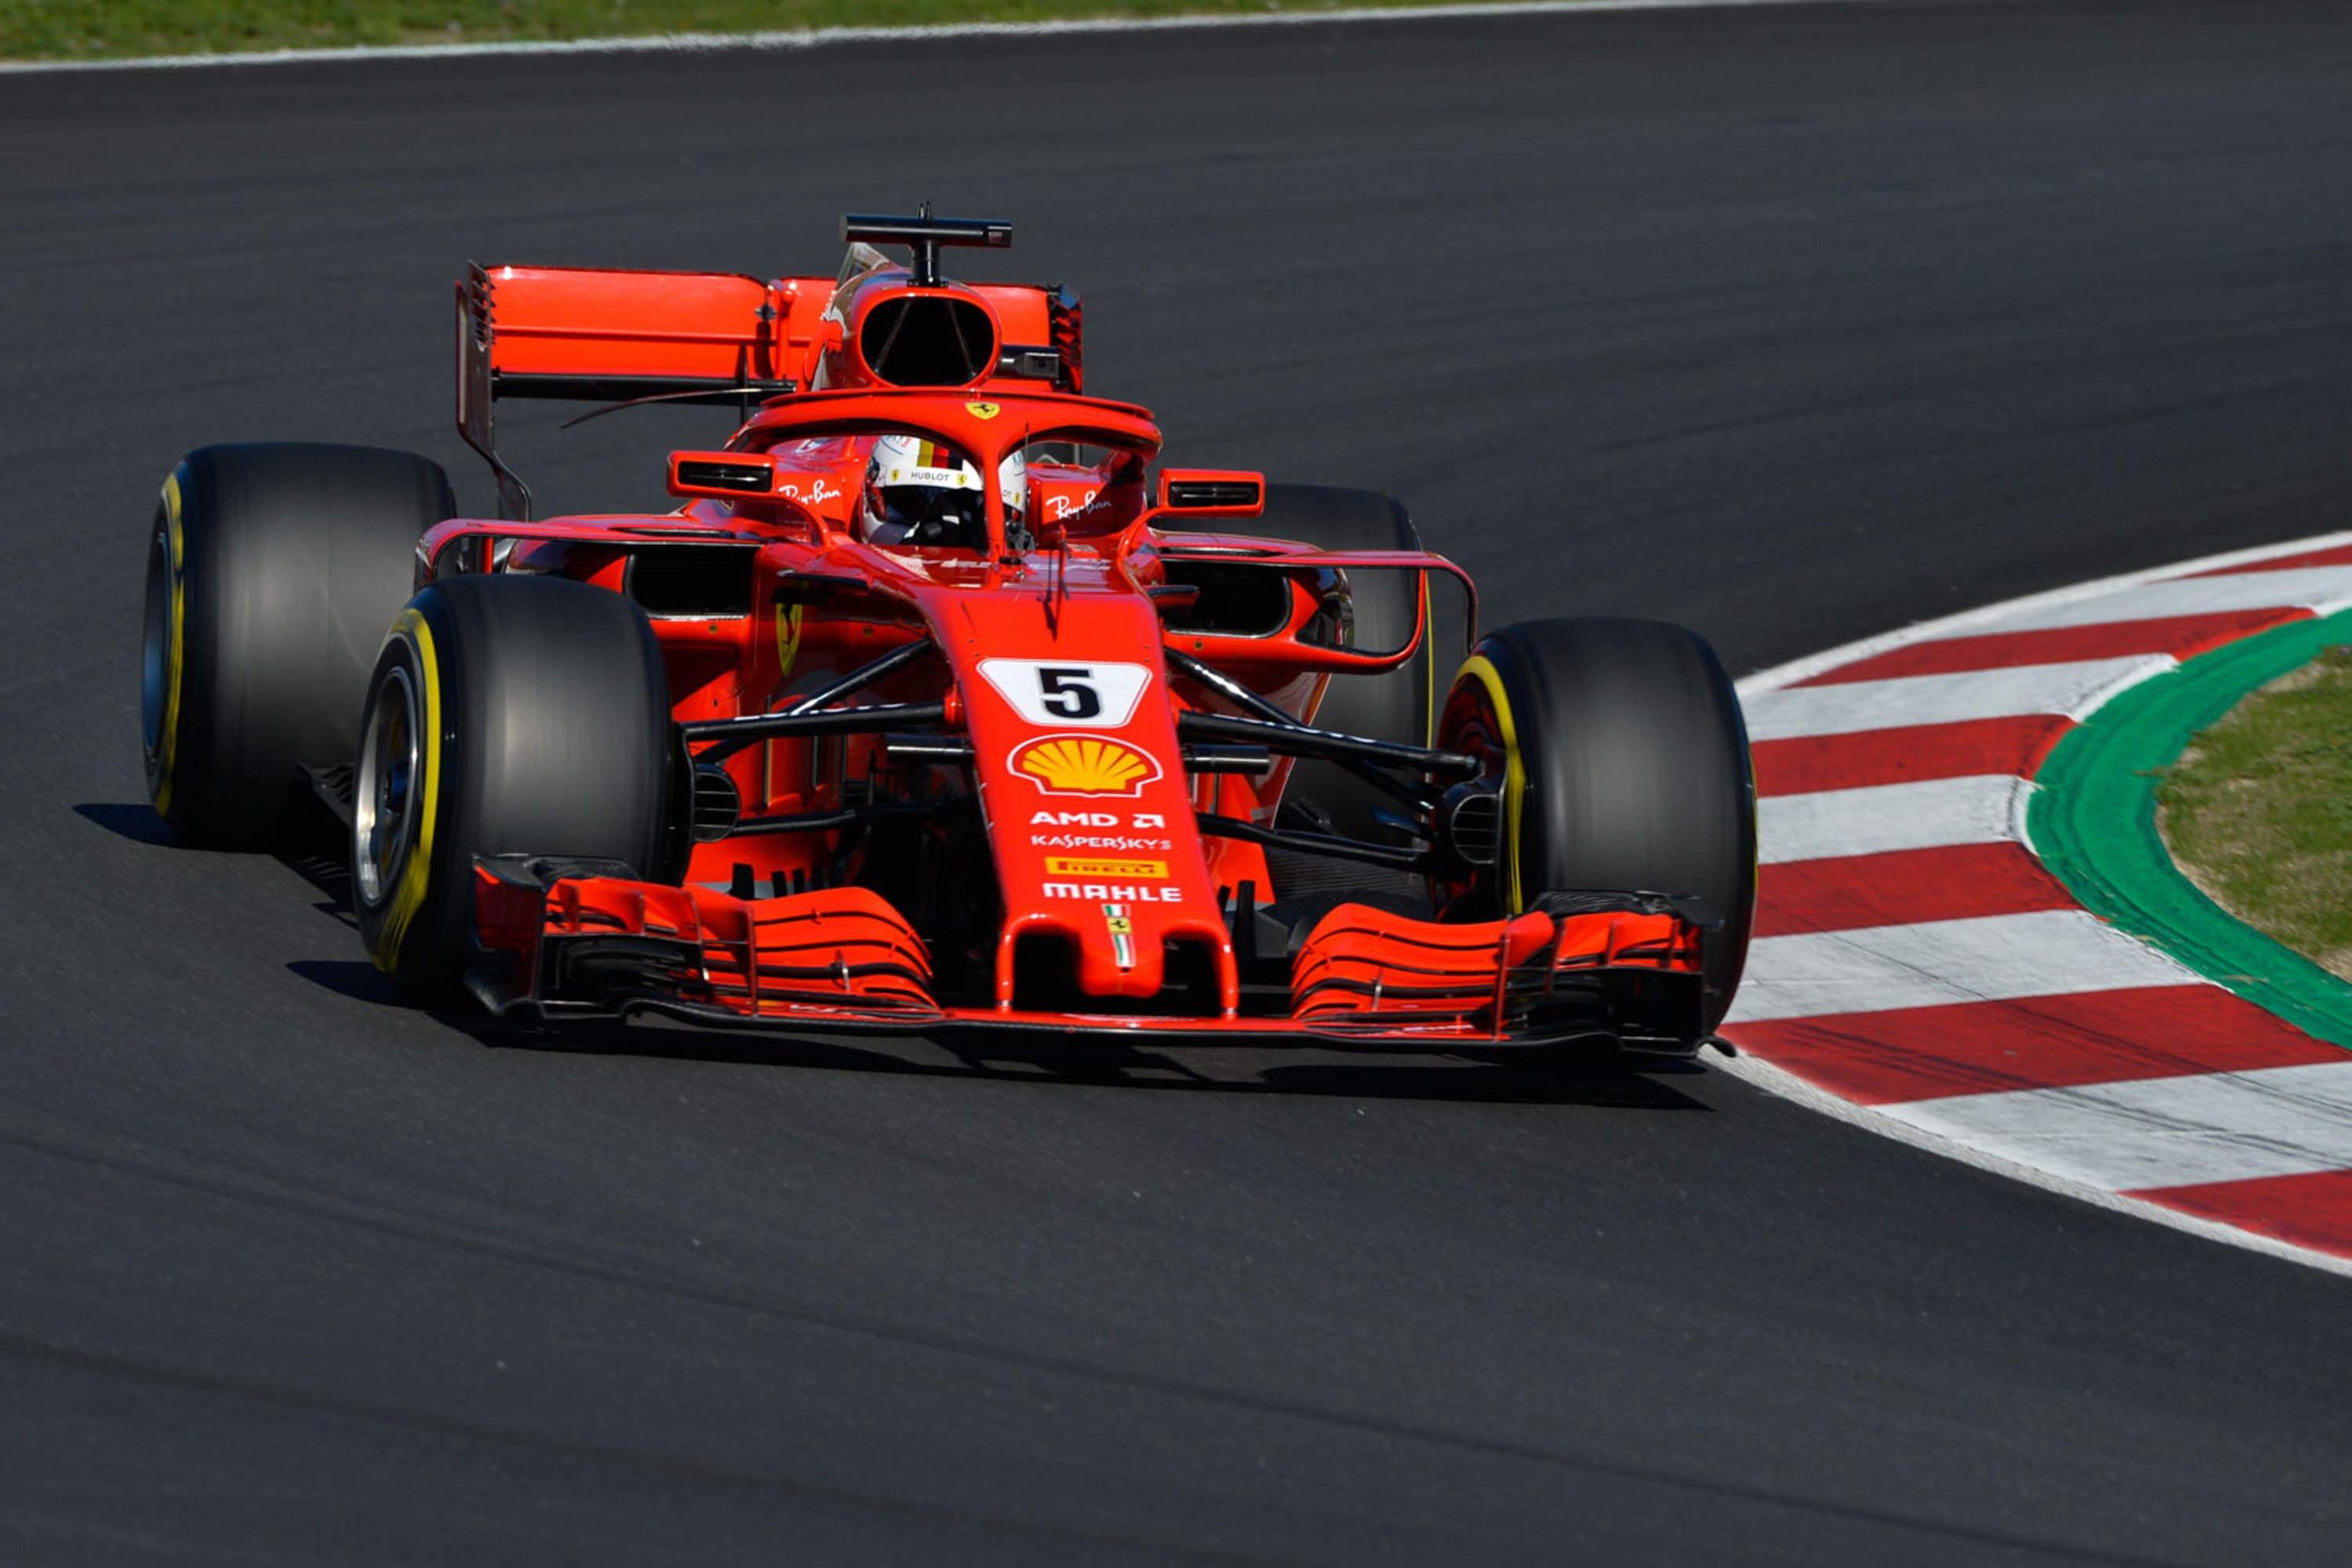 Formula 1 2018, test Barcellona, Day 5: Vettel al top